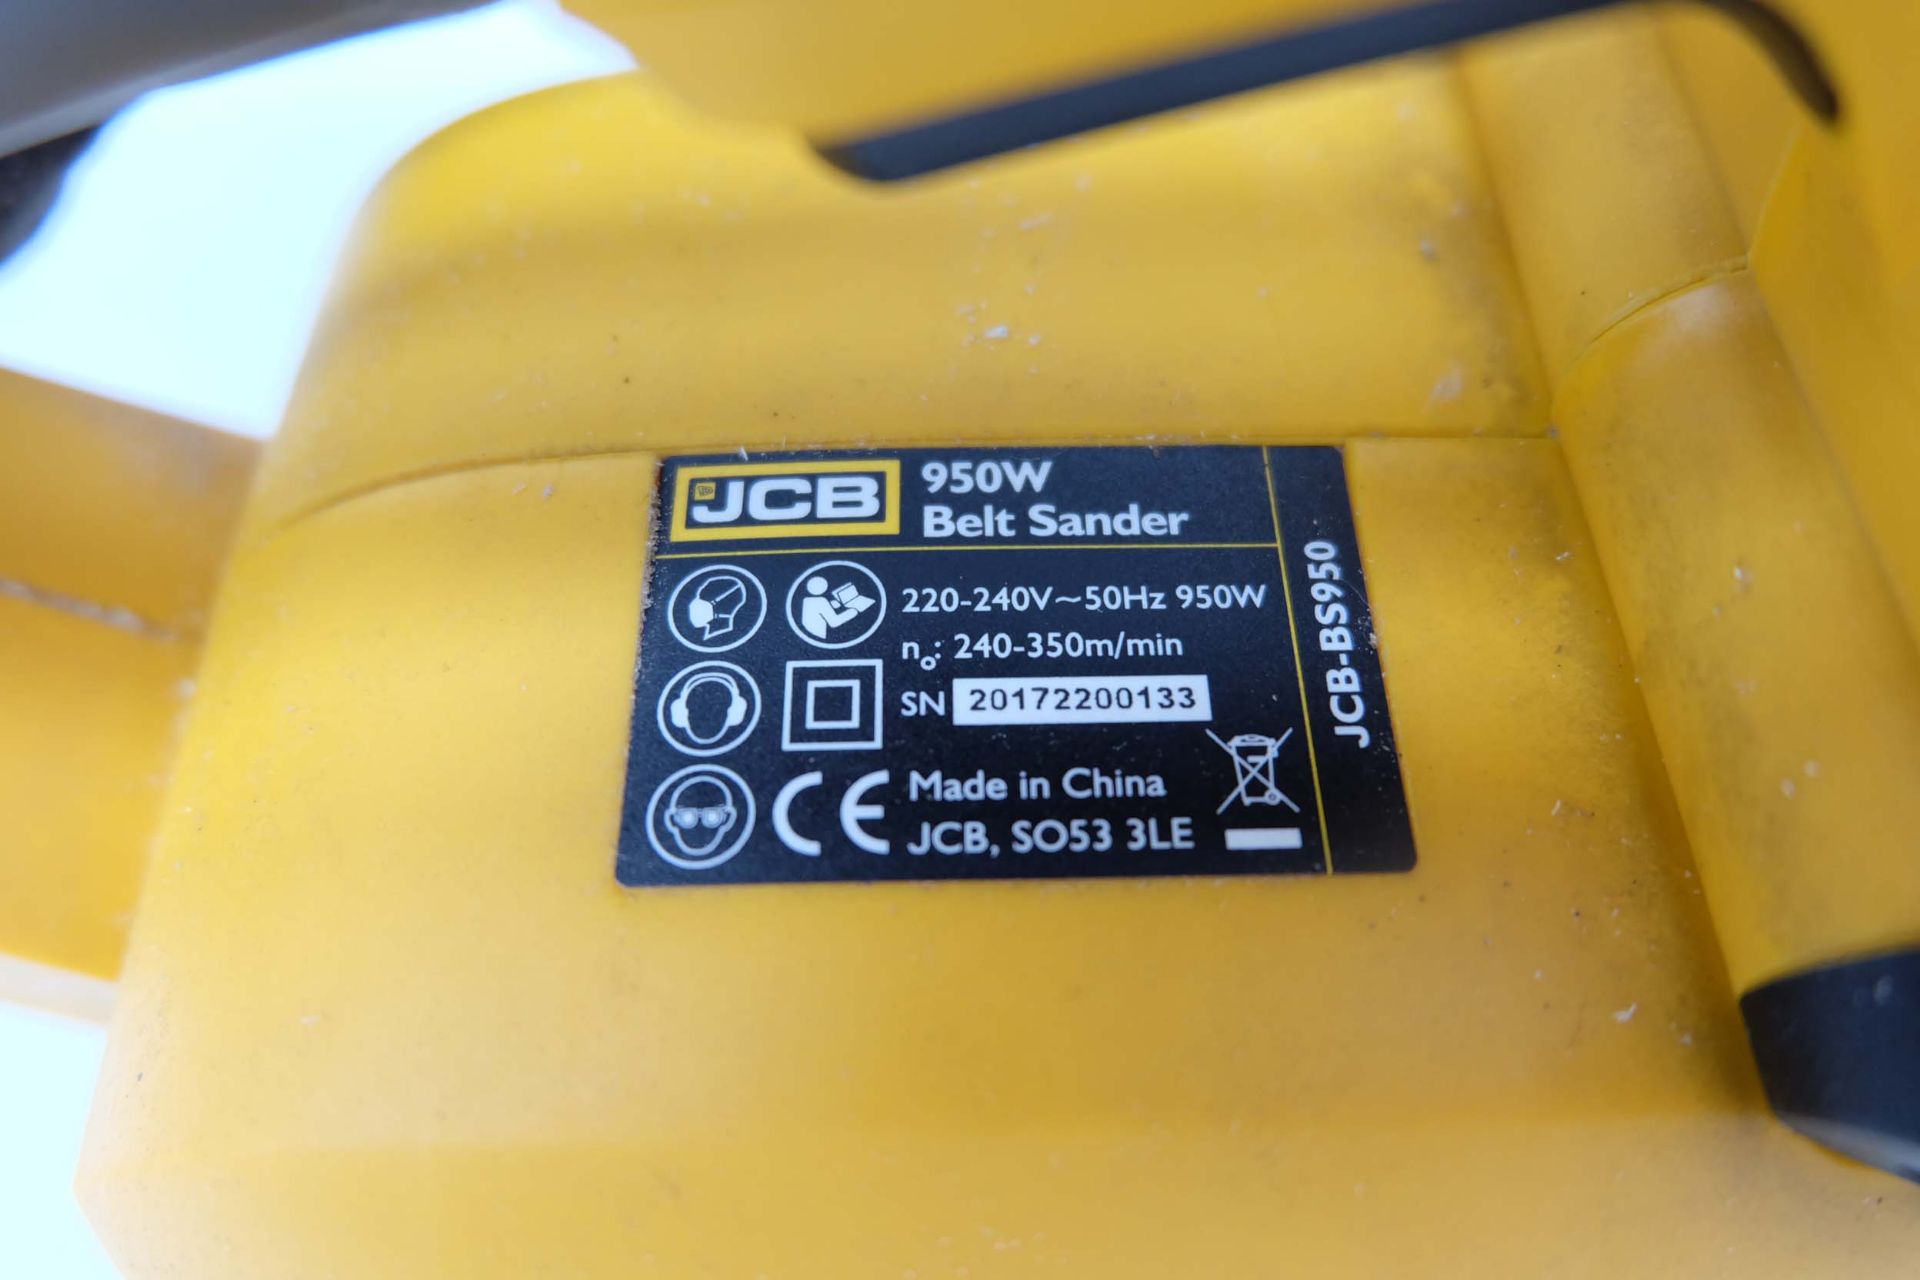 JCB Model BS950 Belt Sander. Width of Belt 70mm. Single Phase 950W. - Image 5 of 5